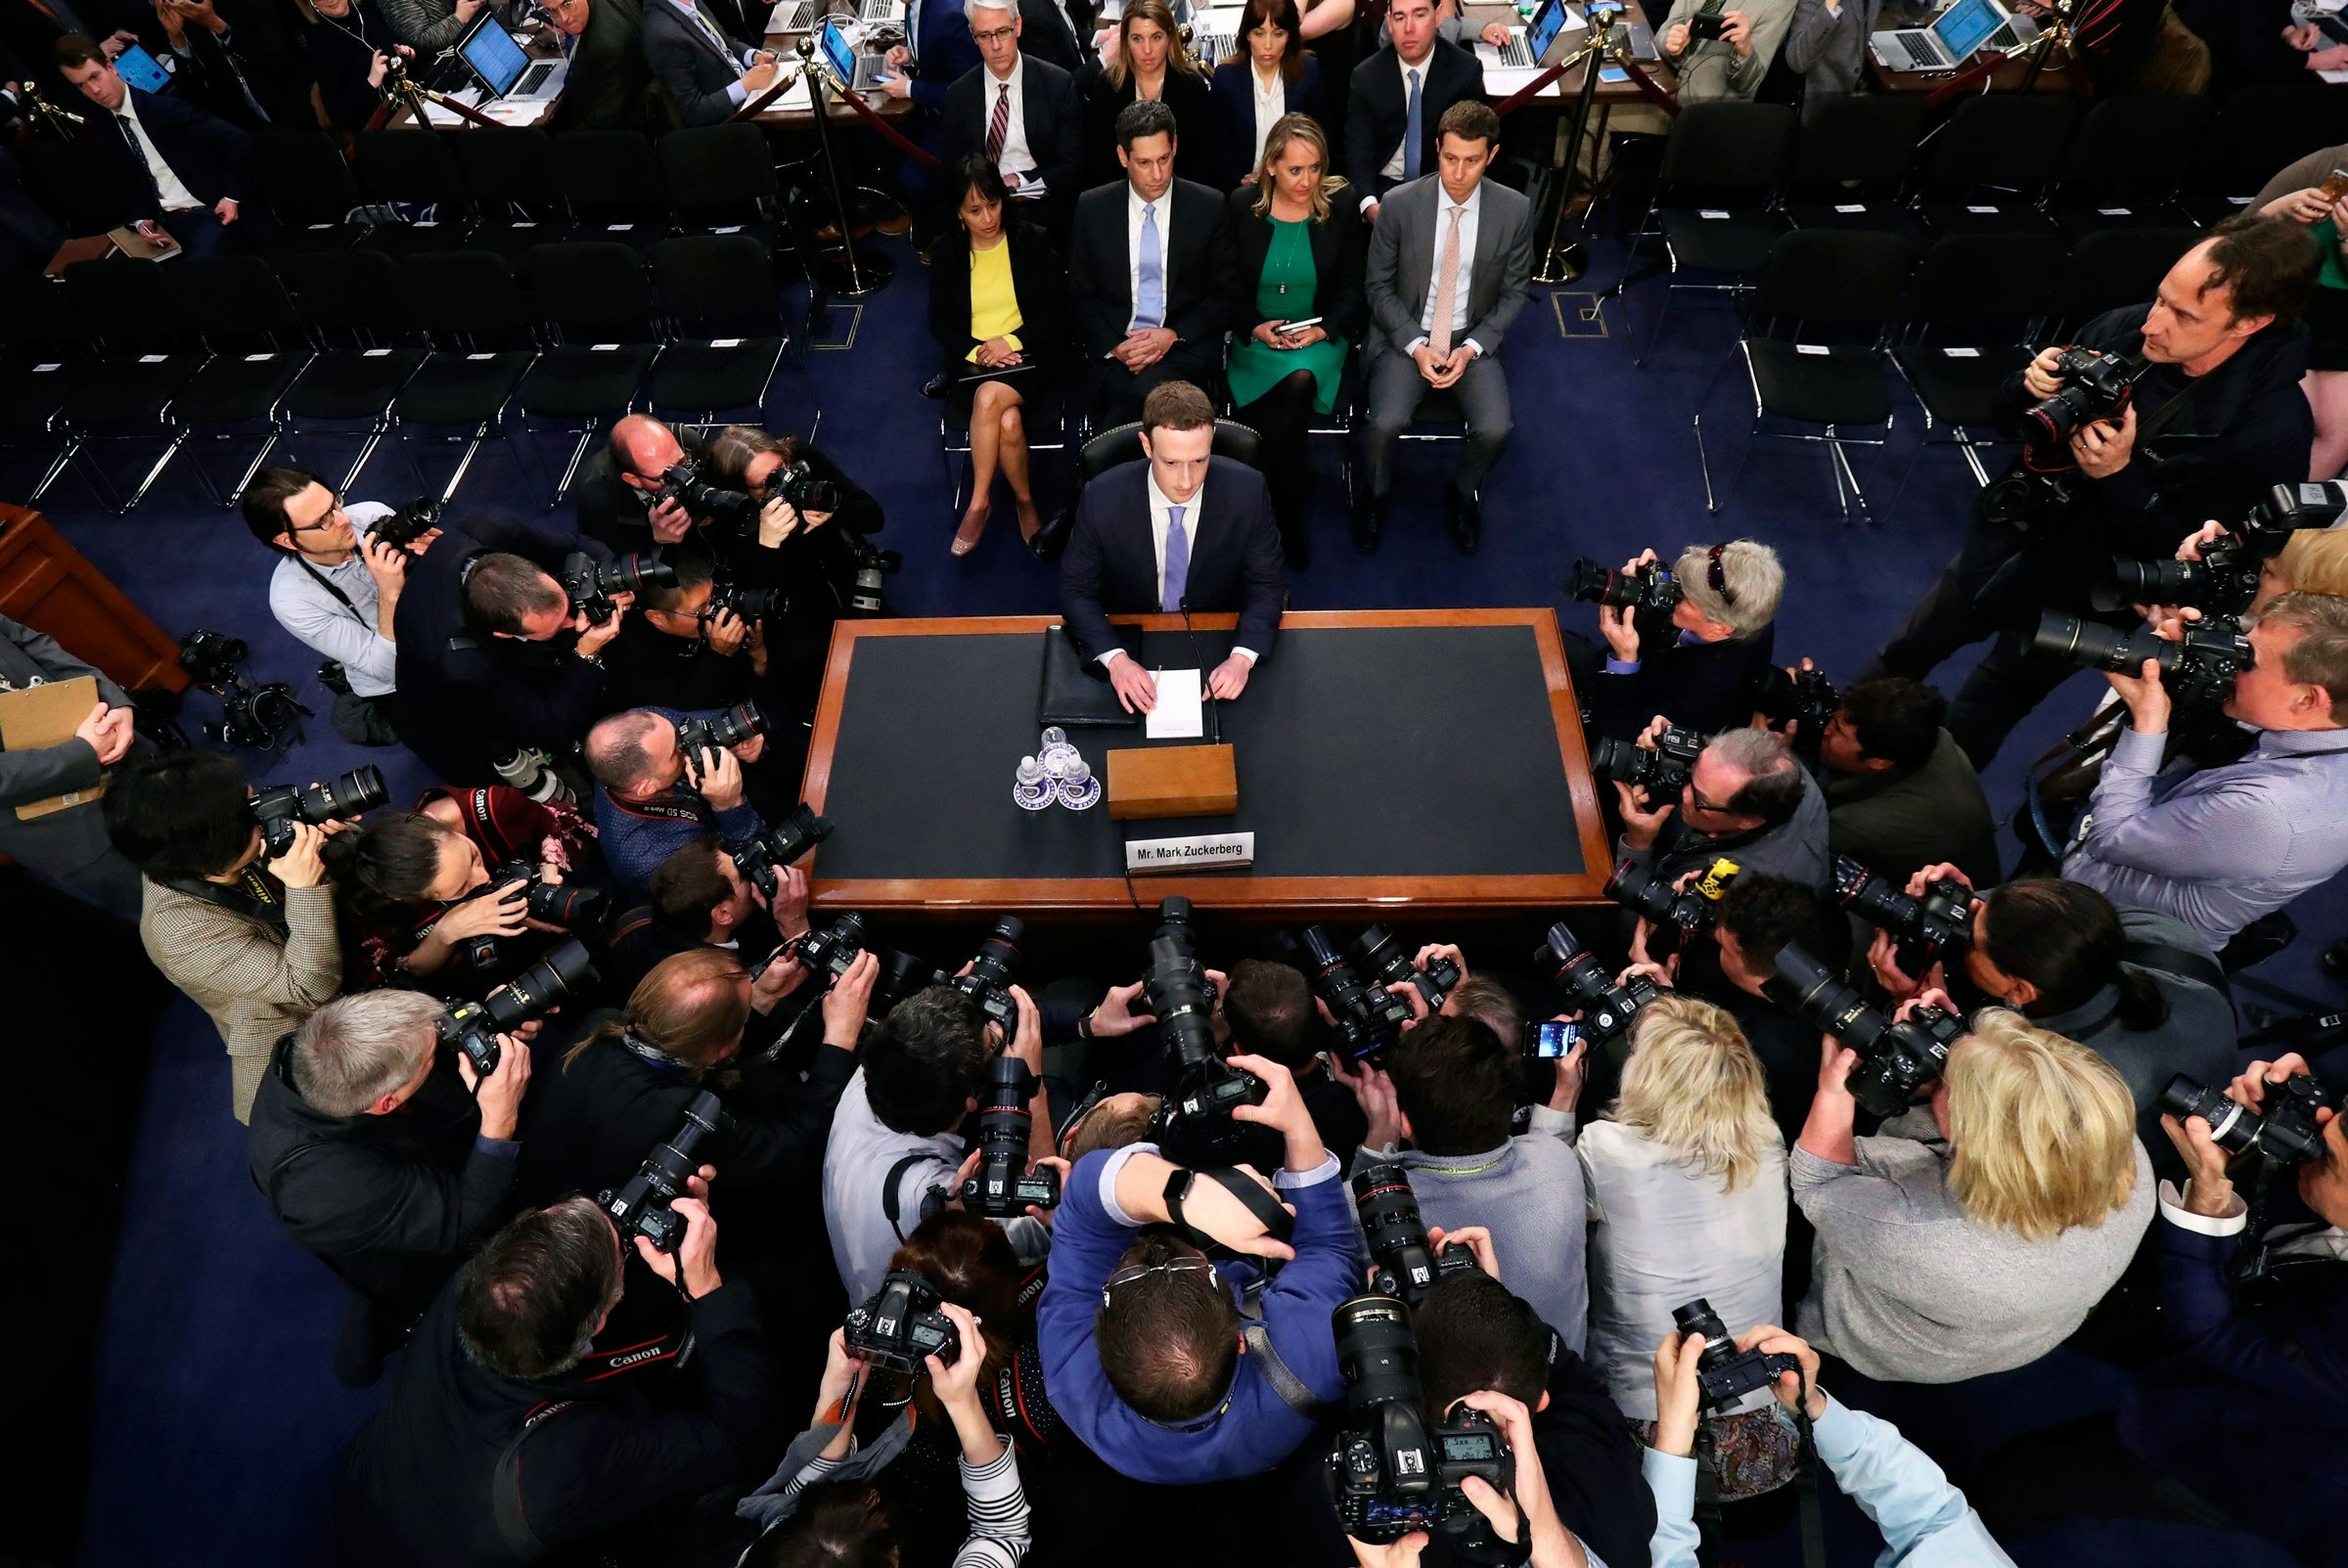 Facebook-founder-Mark-Zuckerberg-testifying-in-front-of-Congress